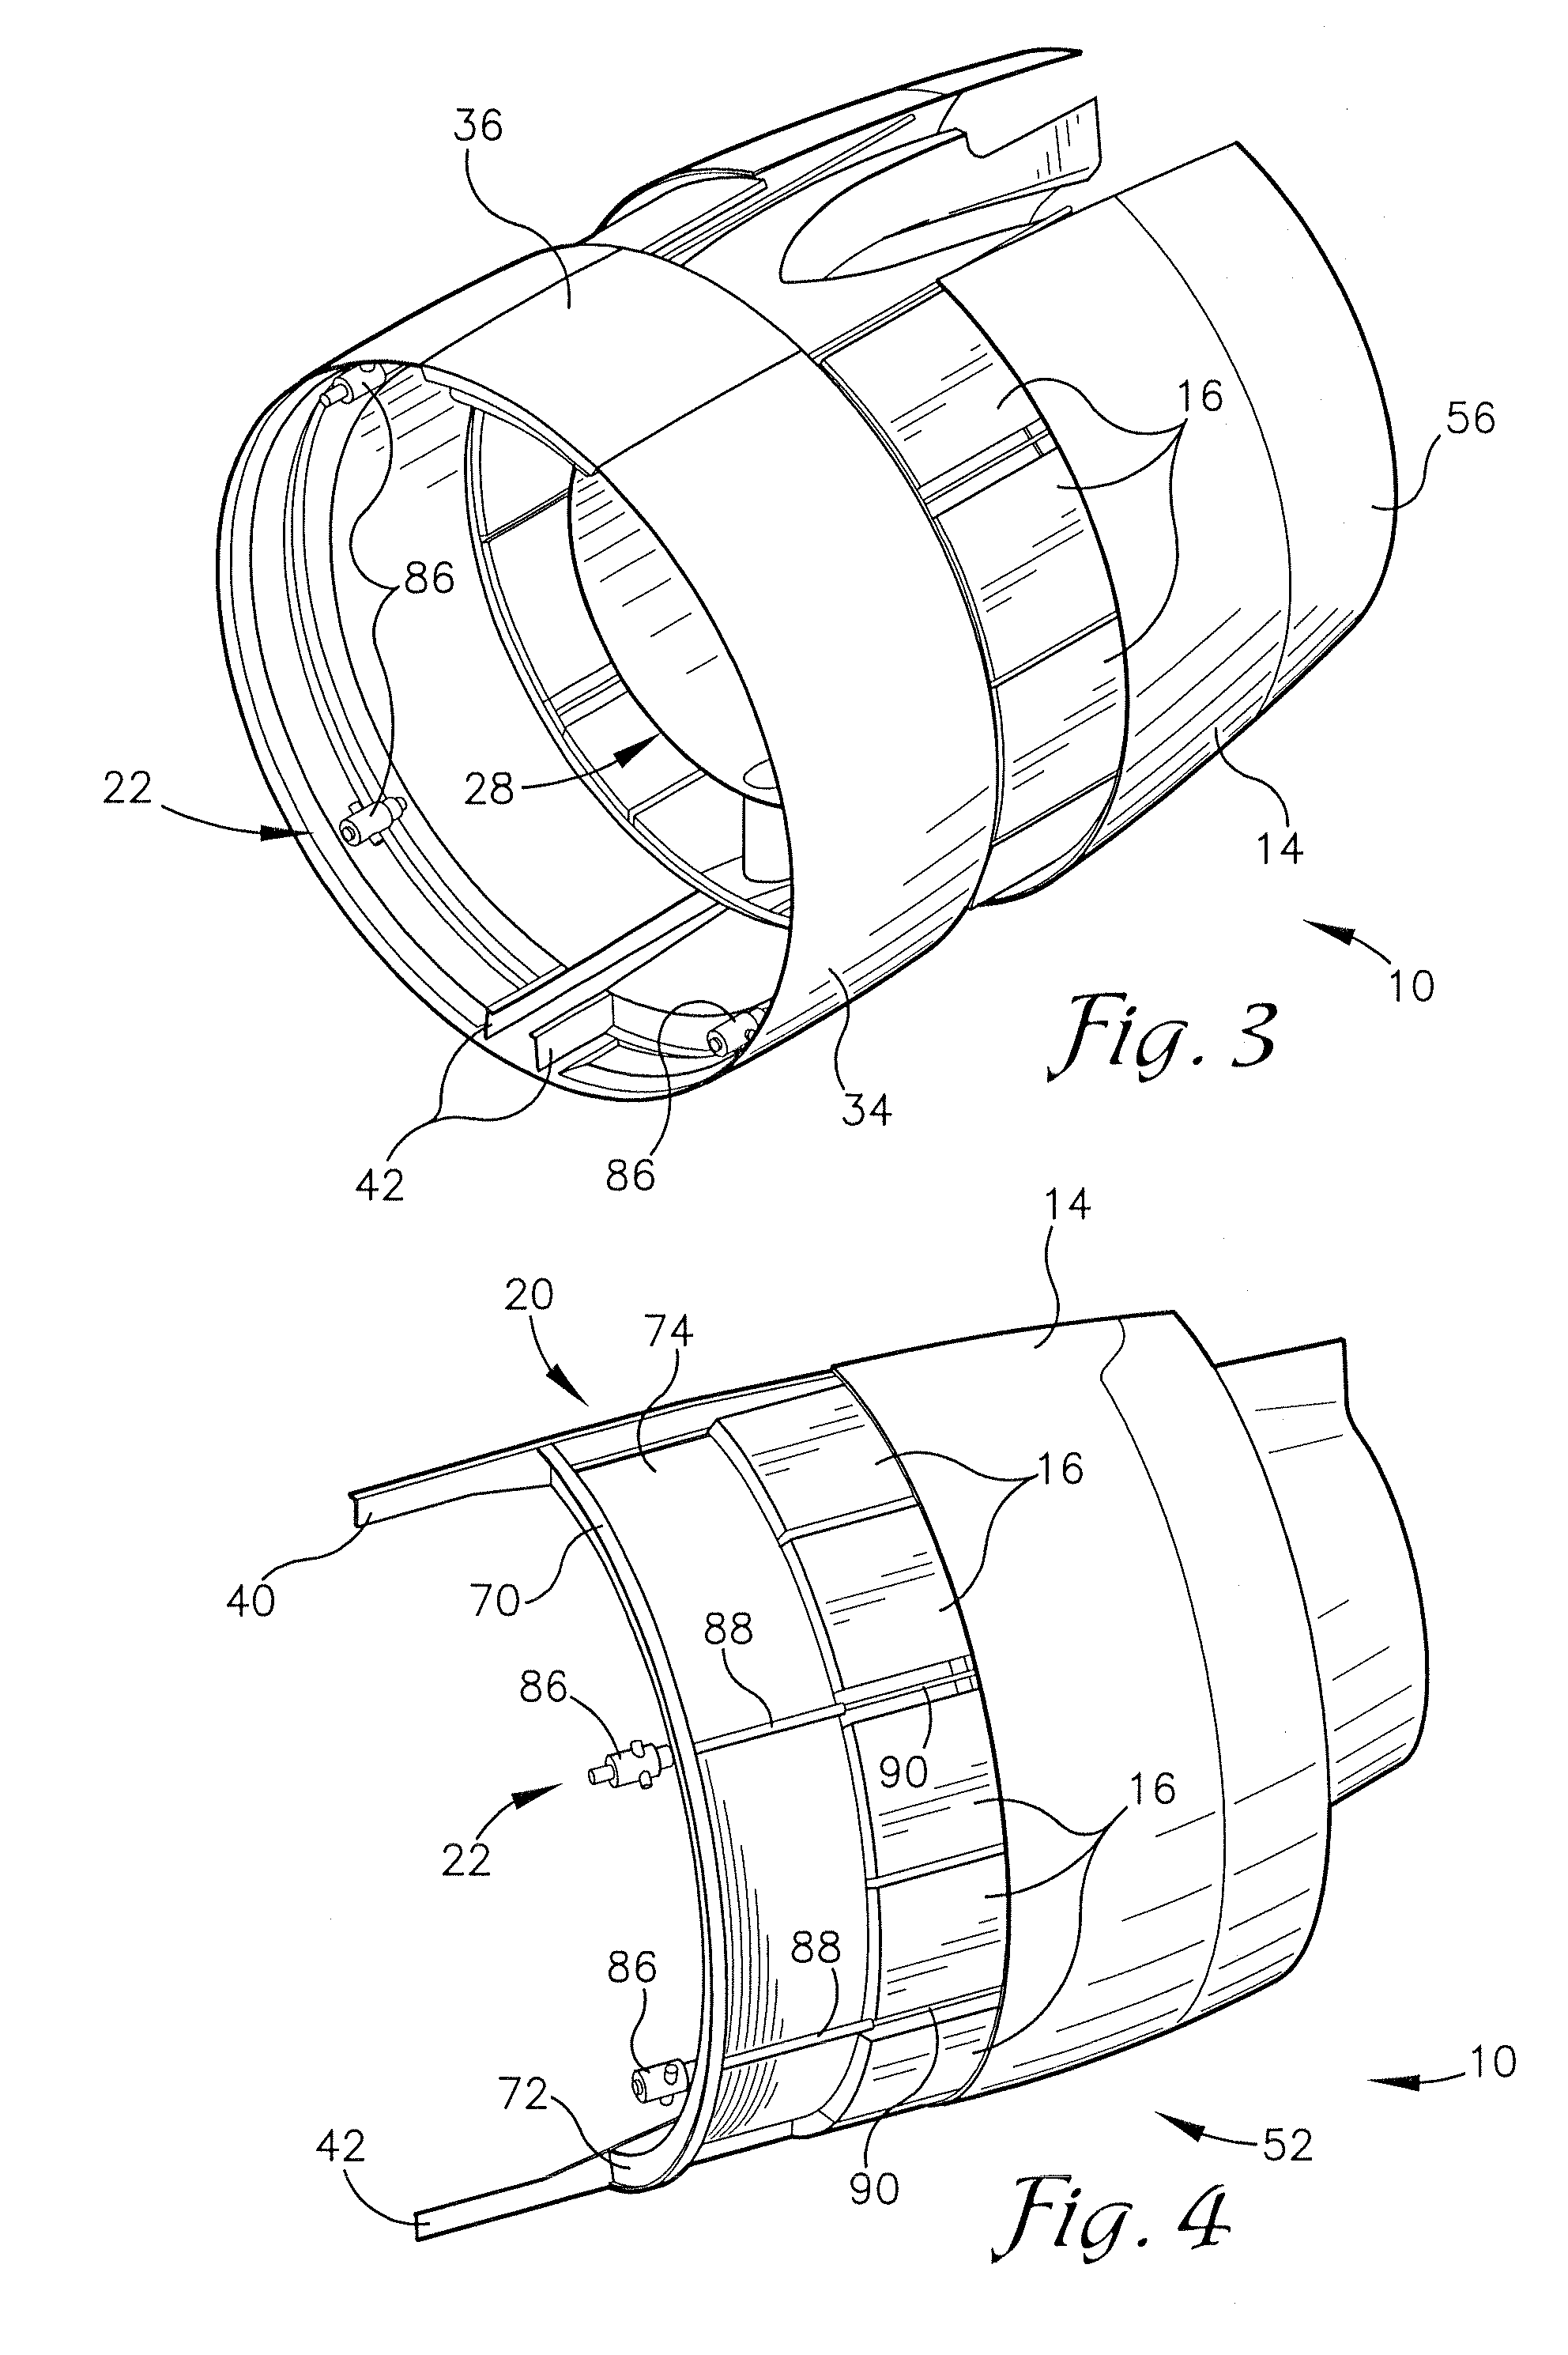 Thrust reverser configuration for a short fan duct